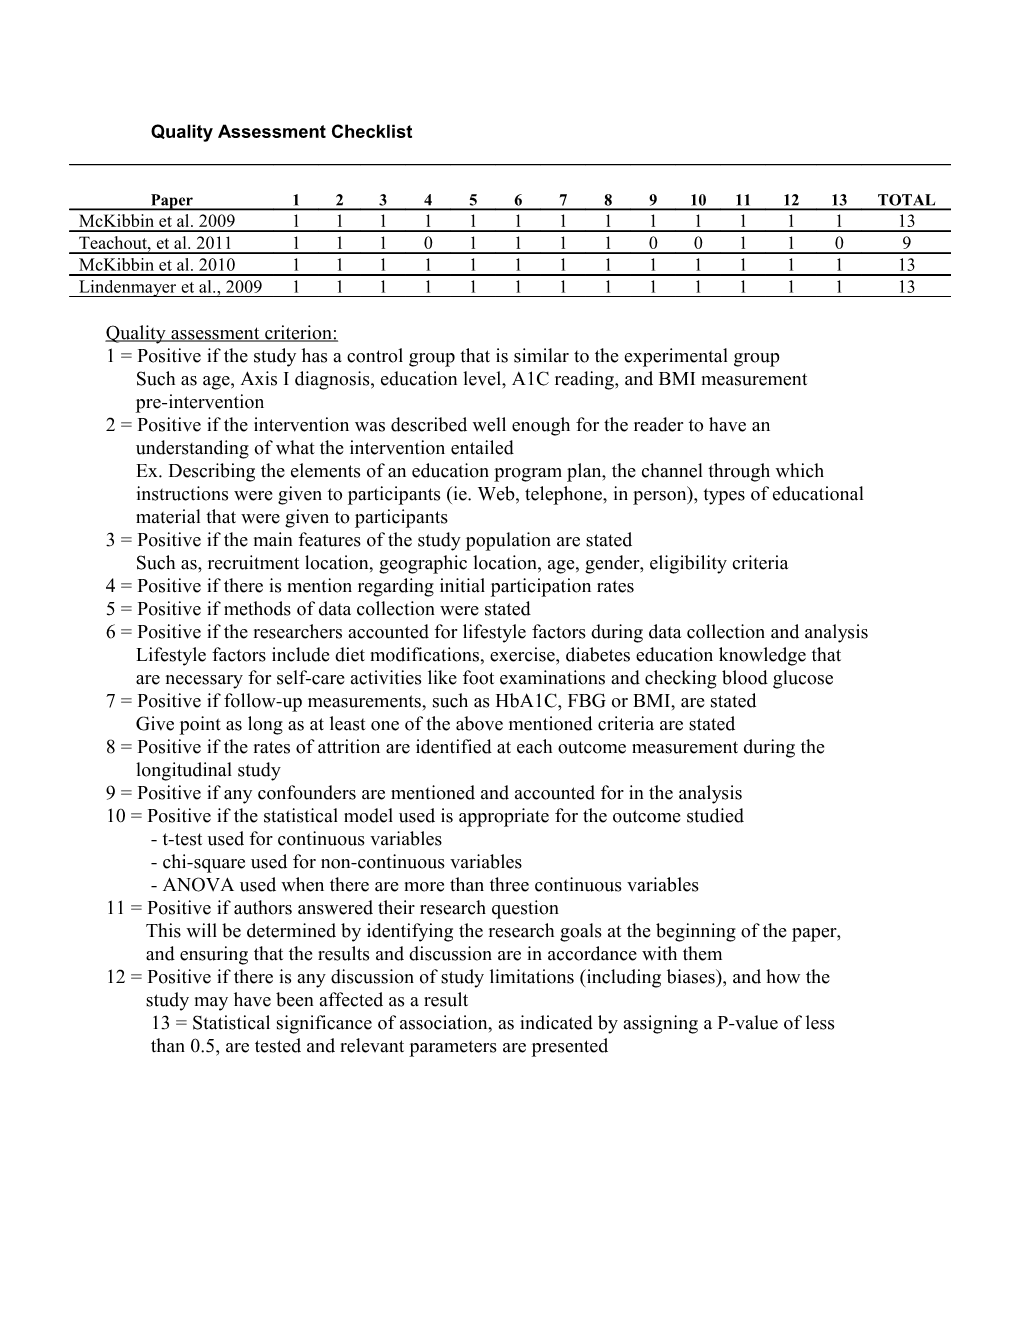 Appendix II: Quality Assessment Checklist